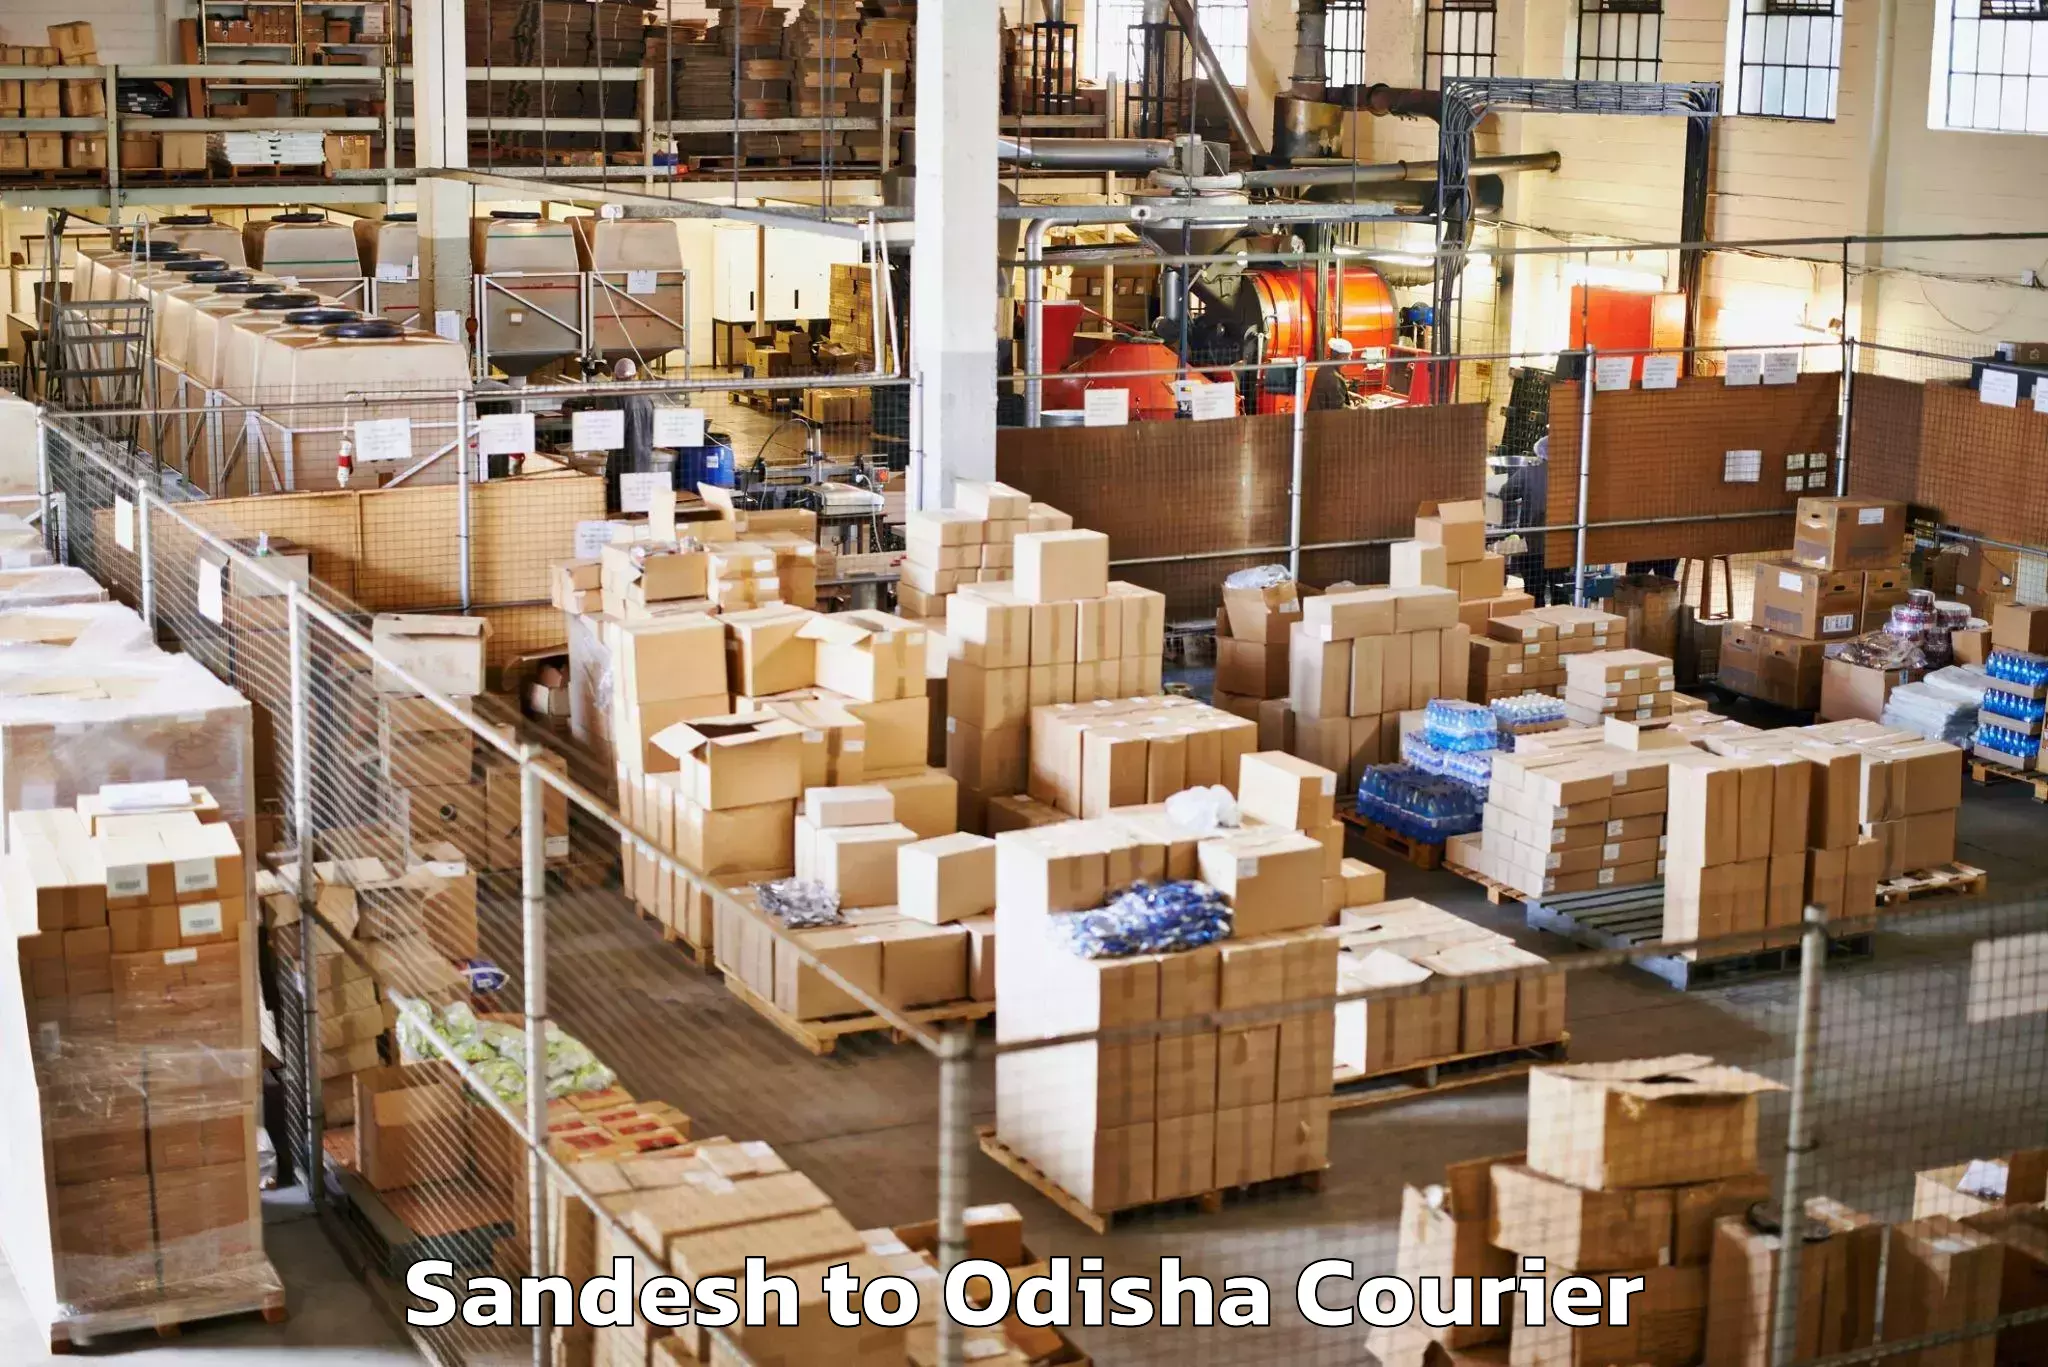 Luggage shipment specialists Sandesh to Keonjhar